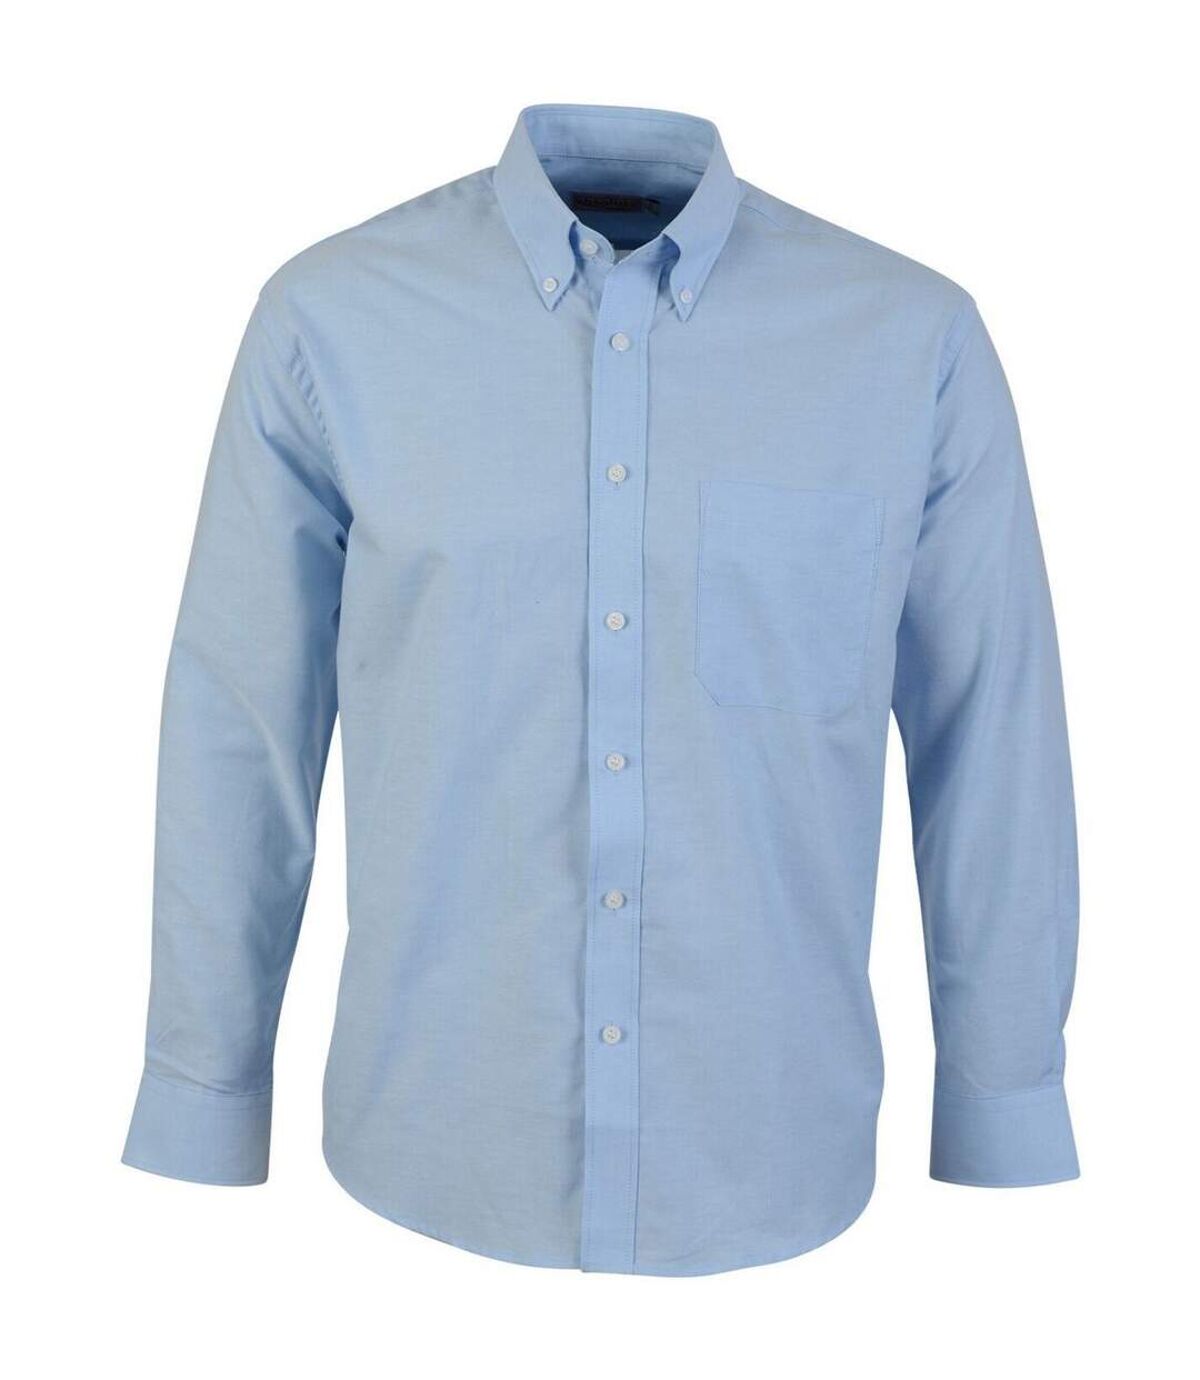 Absolute Apparel Mens Long Sleeved Oxford Shirt (Light Blue) - UTAB119